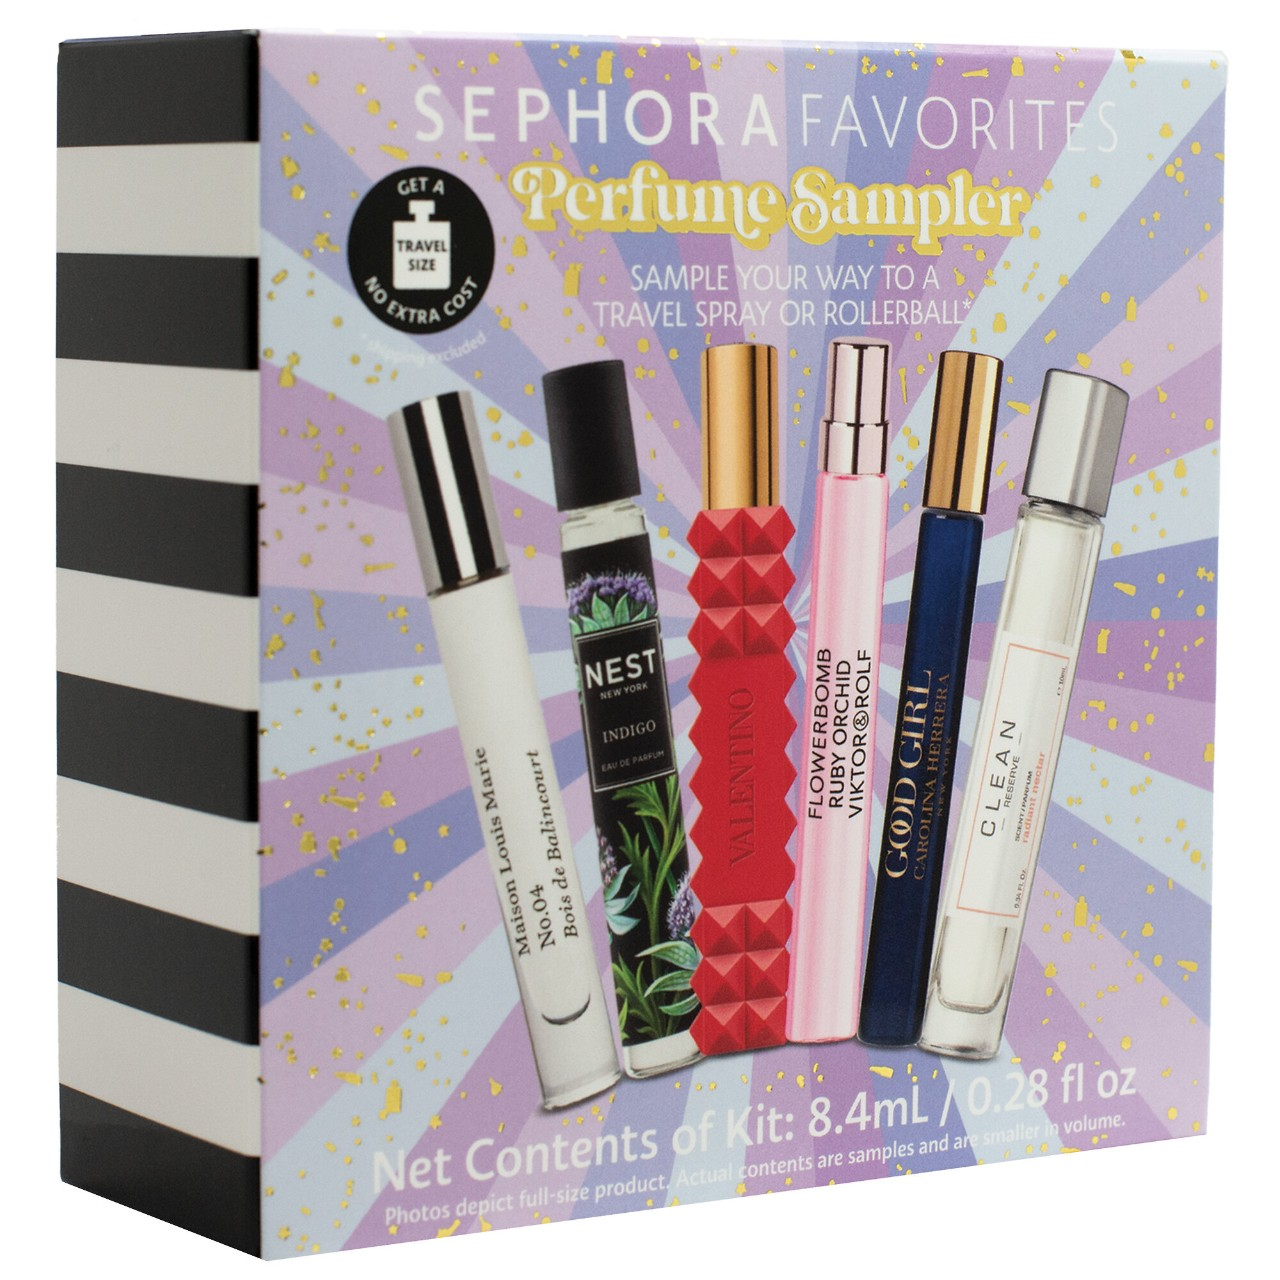 Just dropped at Sephora: Sephora Favorites Mini Perfume Sampler